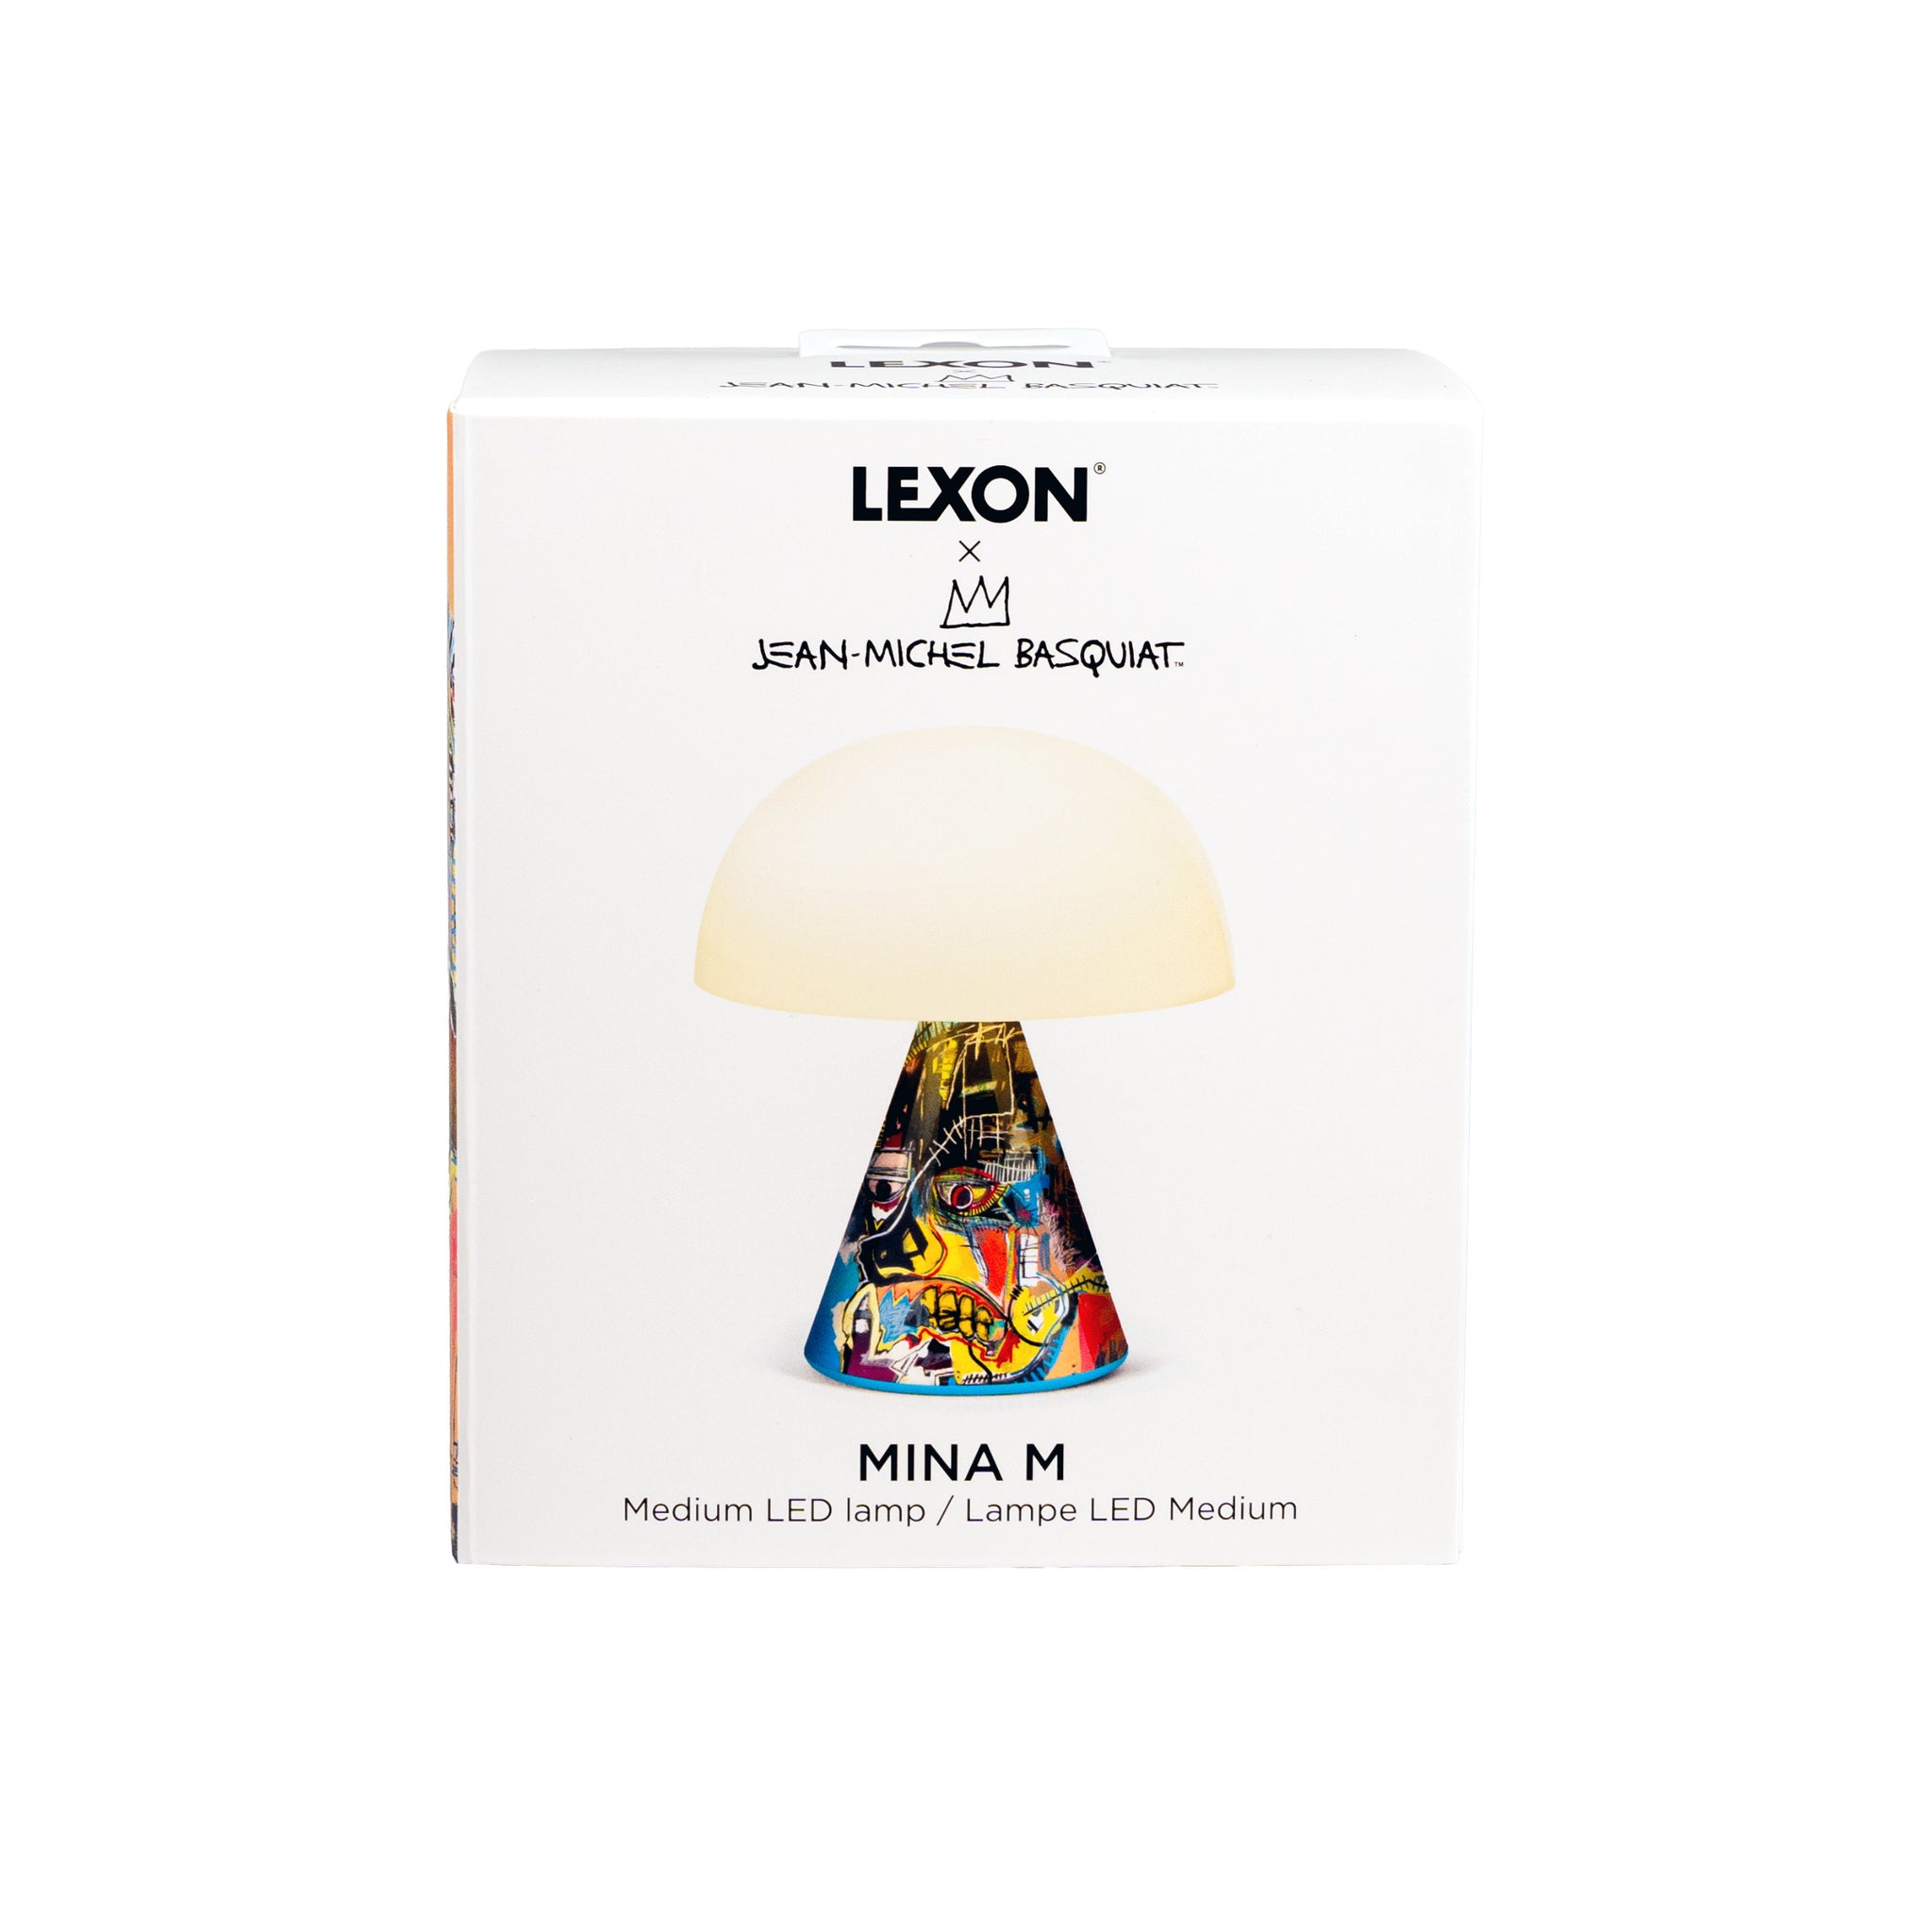 Mina M LED Lamp - Lexon x Jean-Michel Basquiat Skull